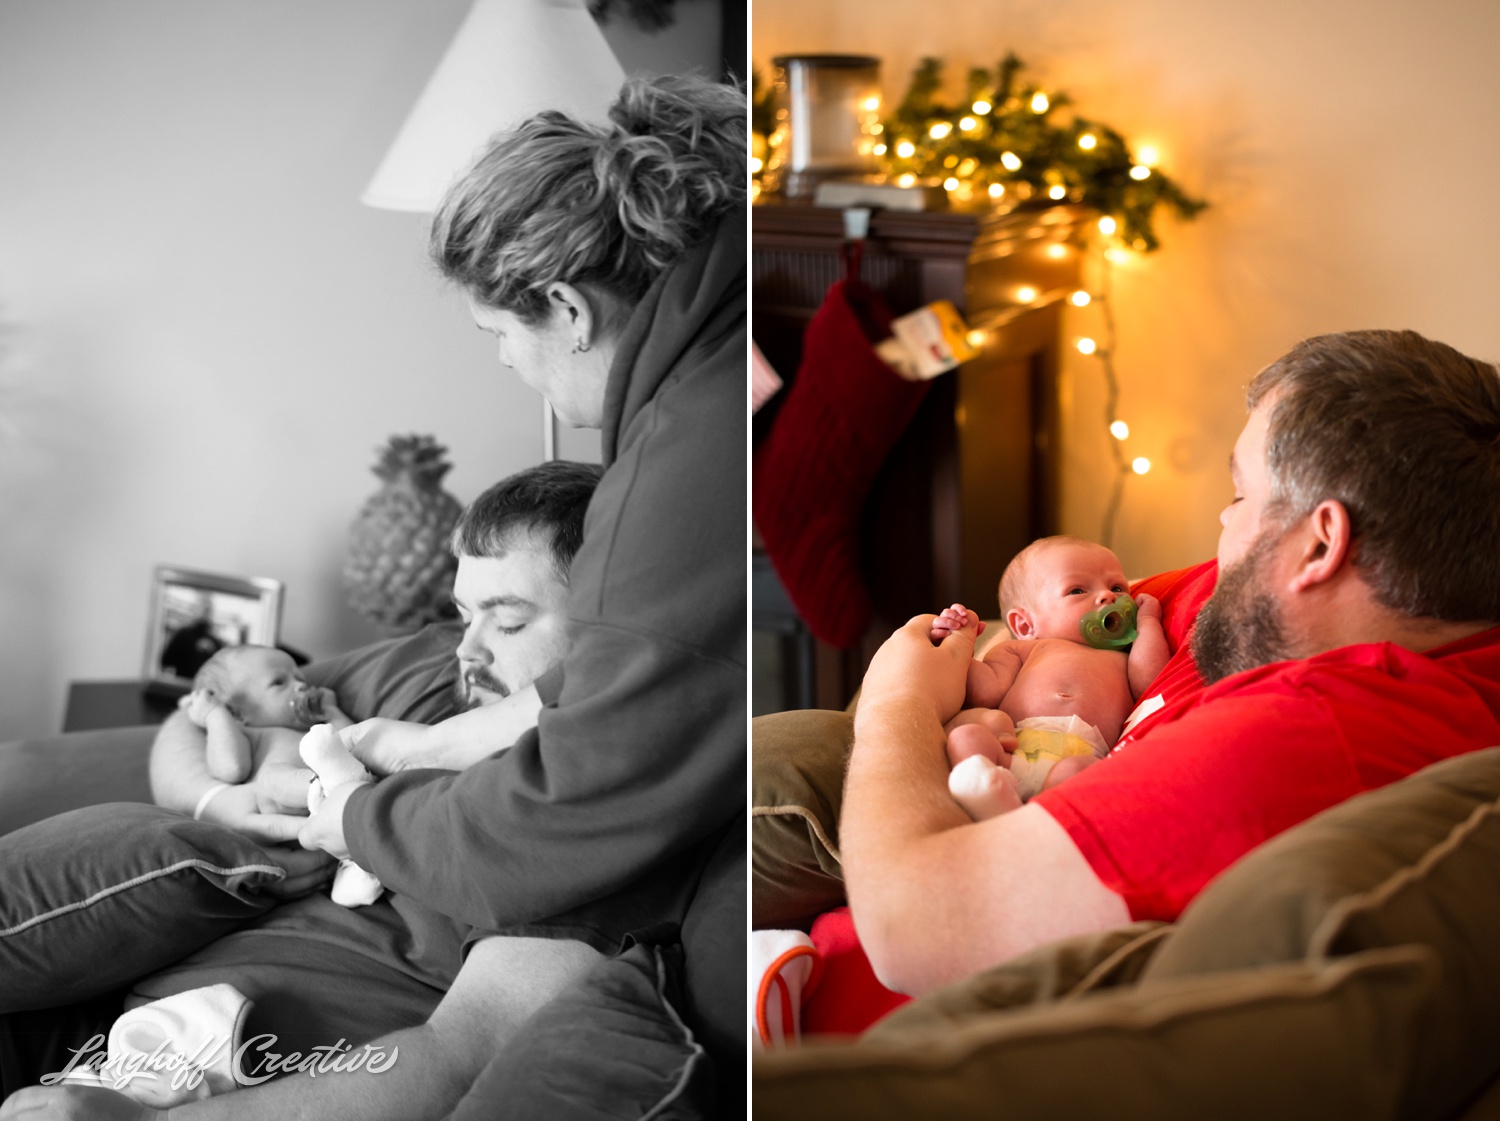 FamilyPhotography-DocumentaryFamilyPhotography-Photojournalism-Newborn-NewbornPhotography-RaleighPhotographer-NCphotographer-LanghoffCreative-Ava-2014-12-photo.jpg